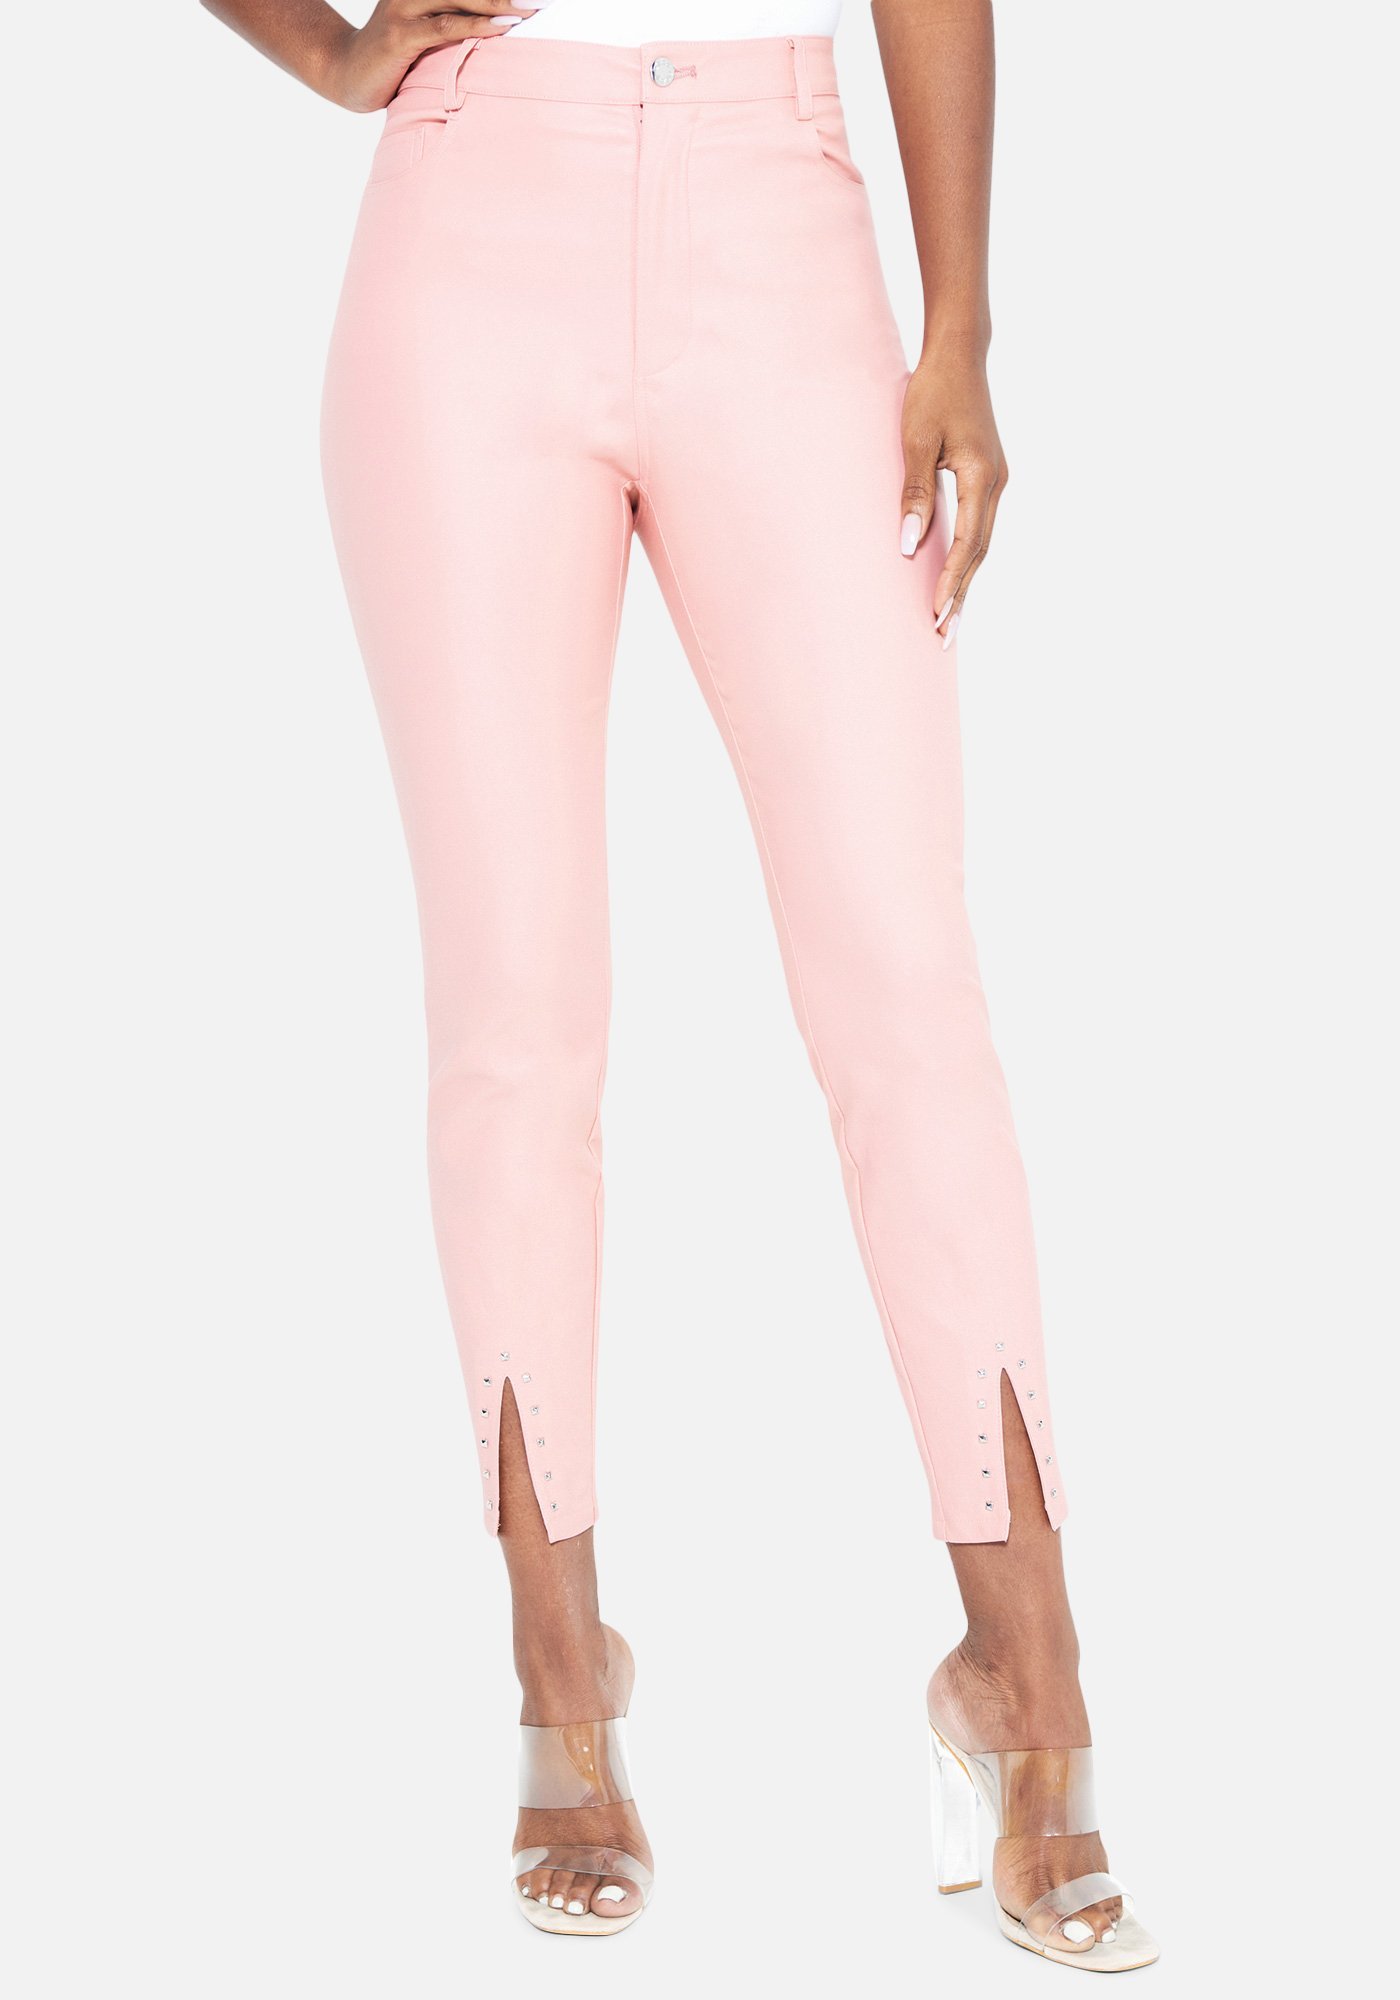 Bebe Women's Stud Detail Slit Front Coated Pant, Size 8 in BRIDAL ROSE Spandex/Nylon